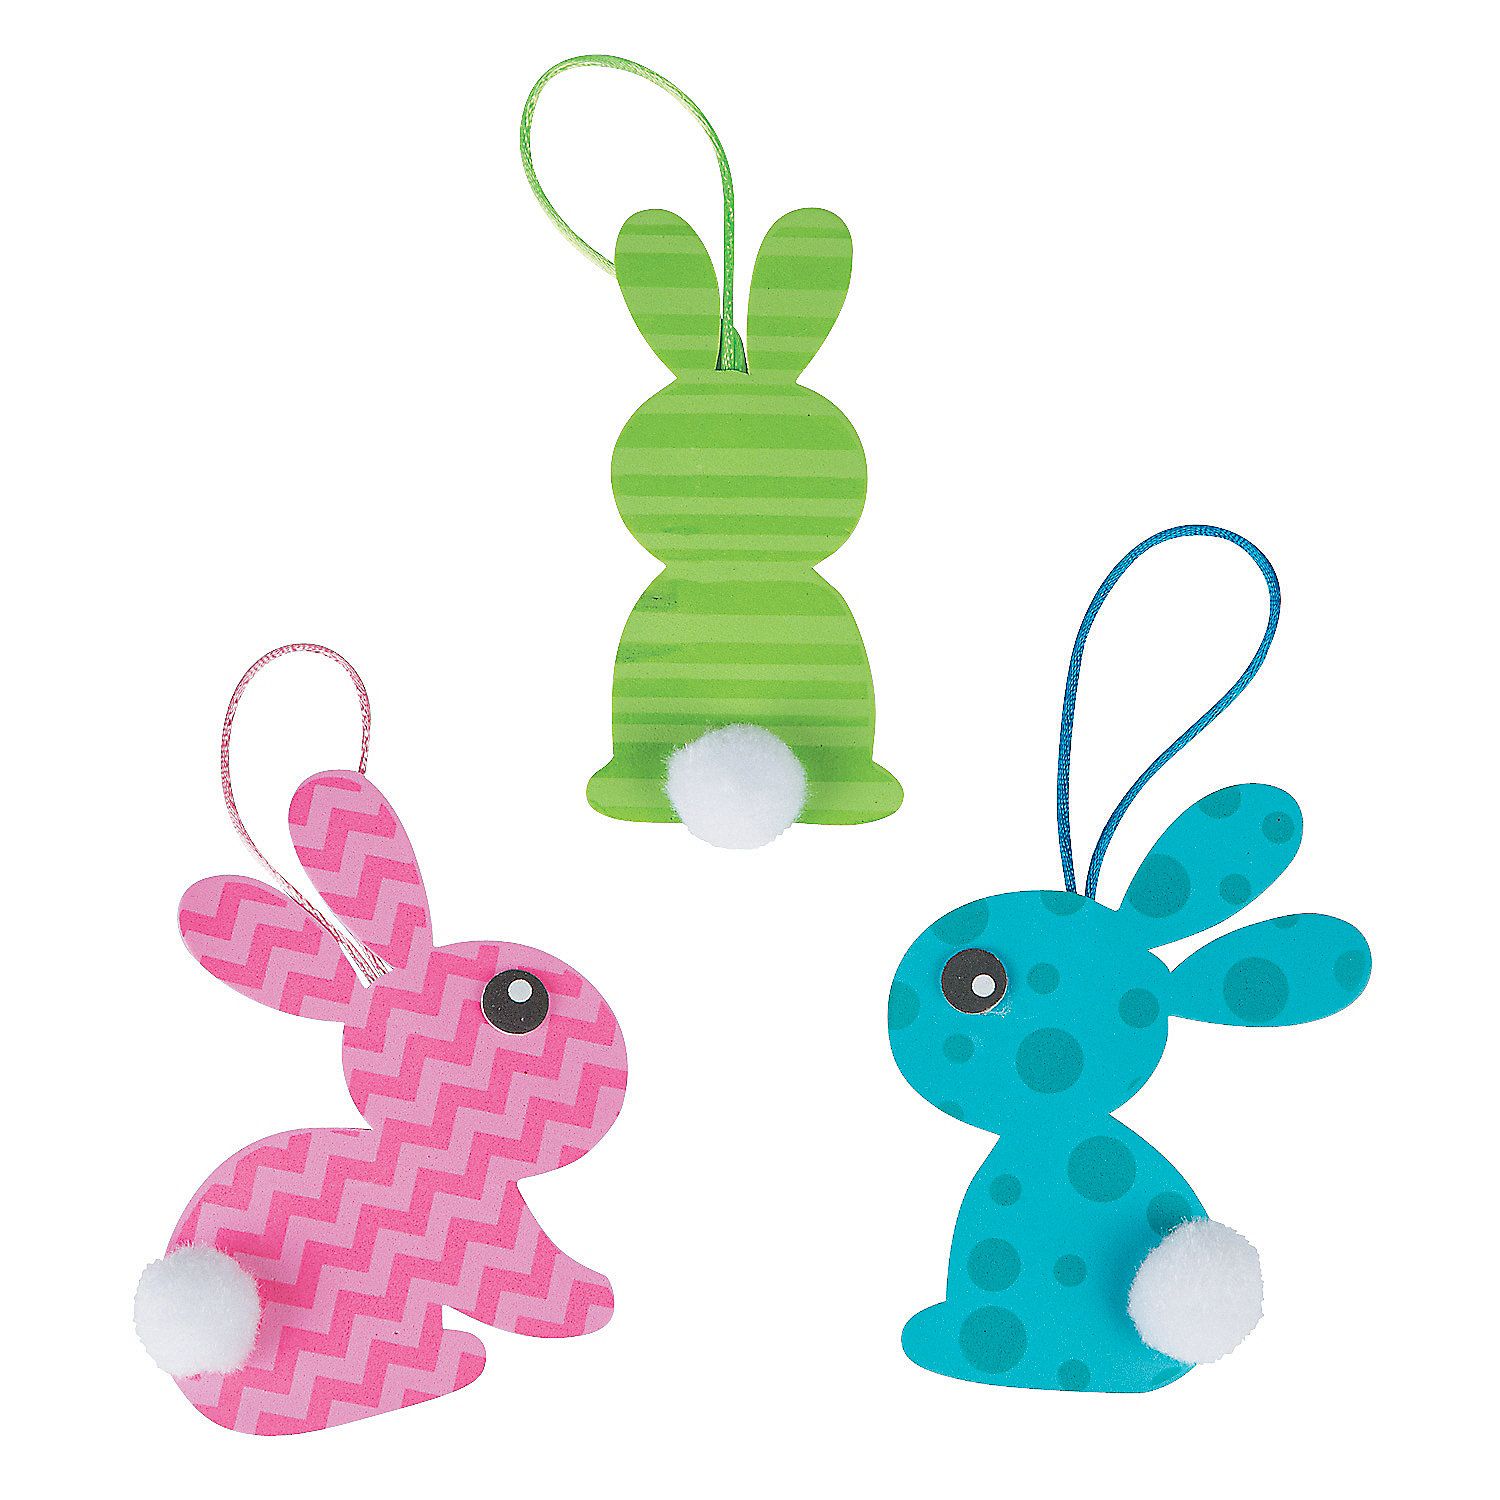 Pom-Pom Bunny Tail Ornament Craft Kit | Craft kits, Bunny and Ornament